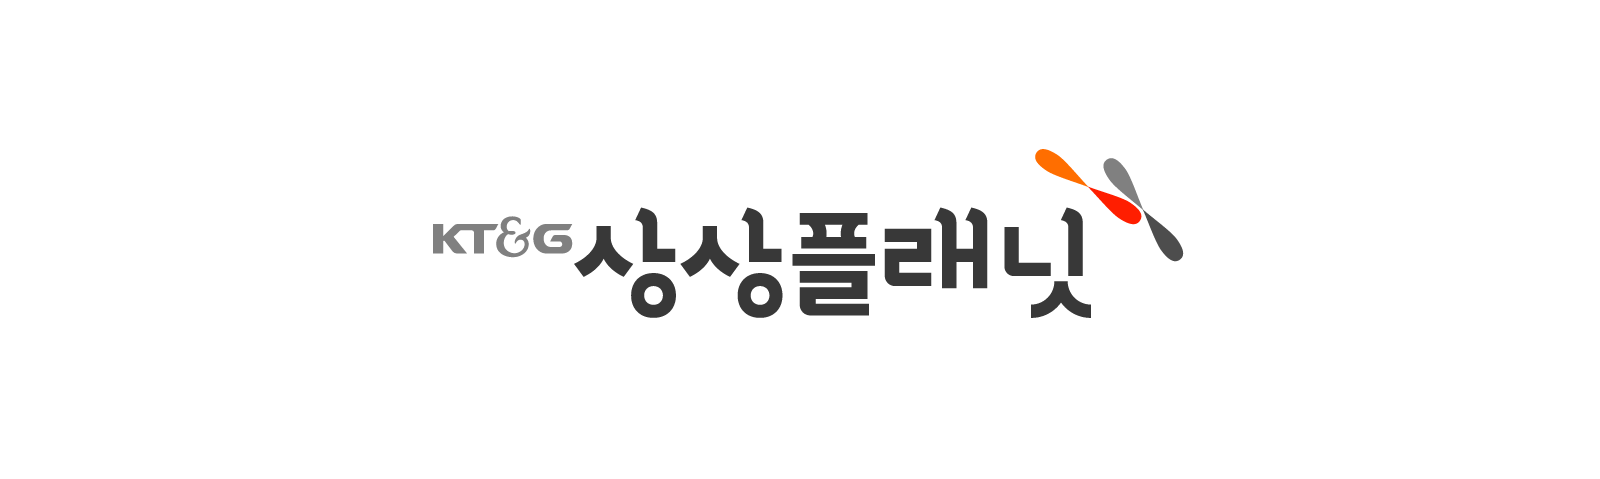 KT&G 상상플래닛 Logo